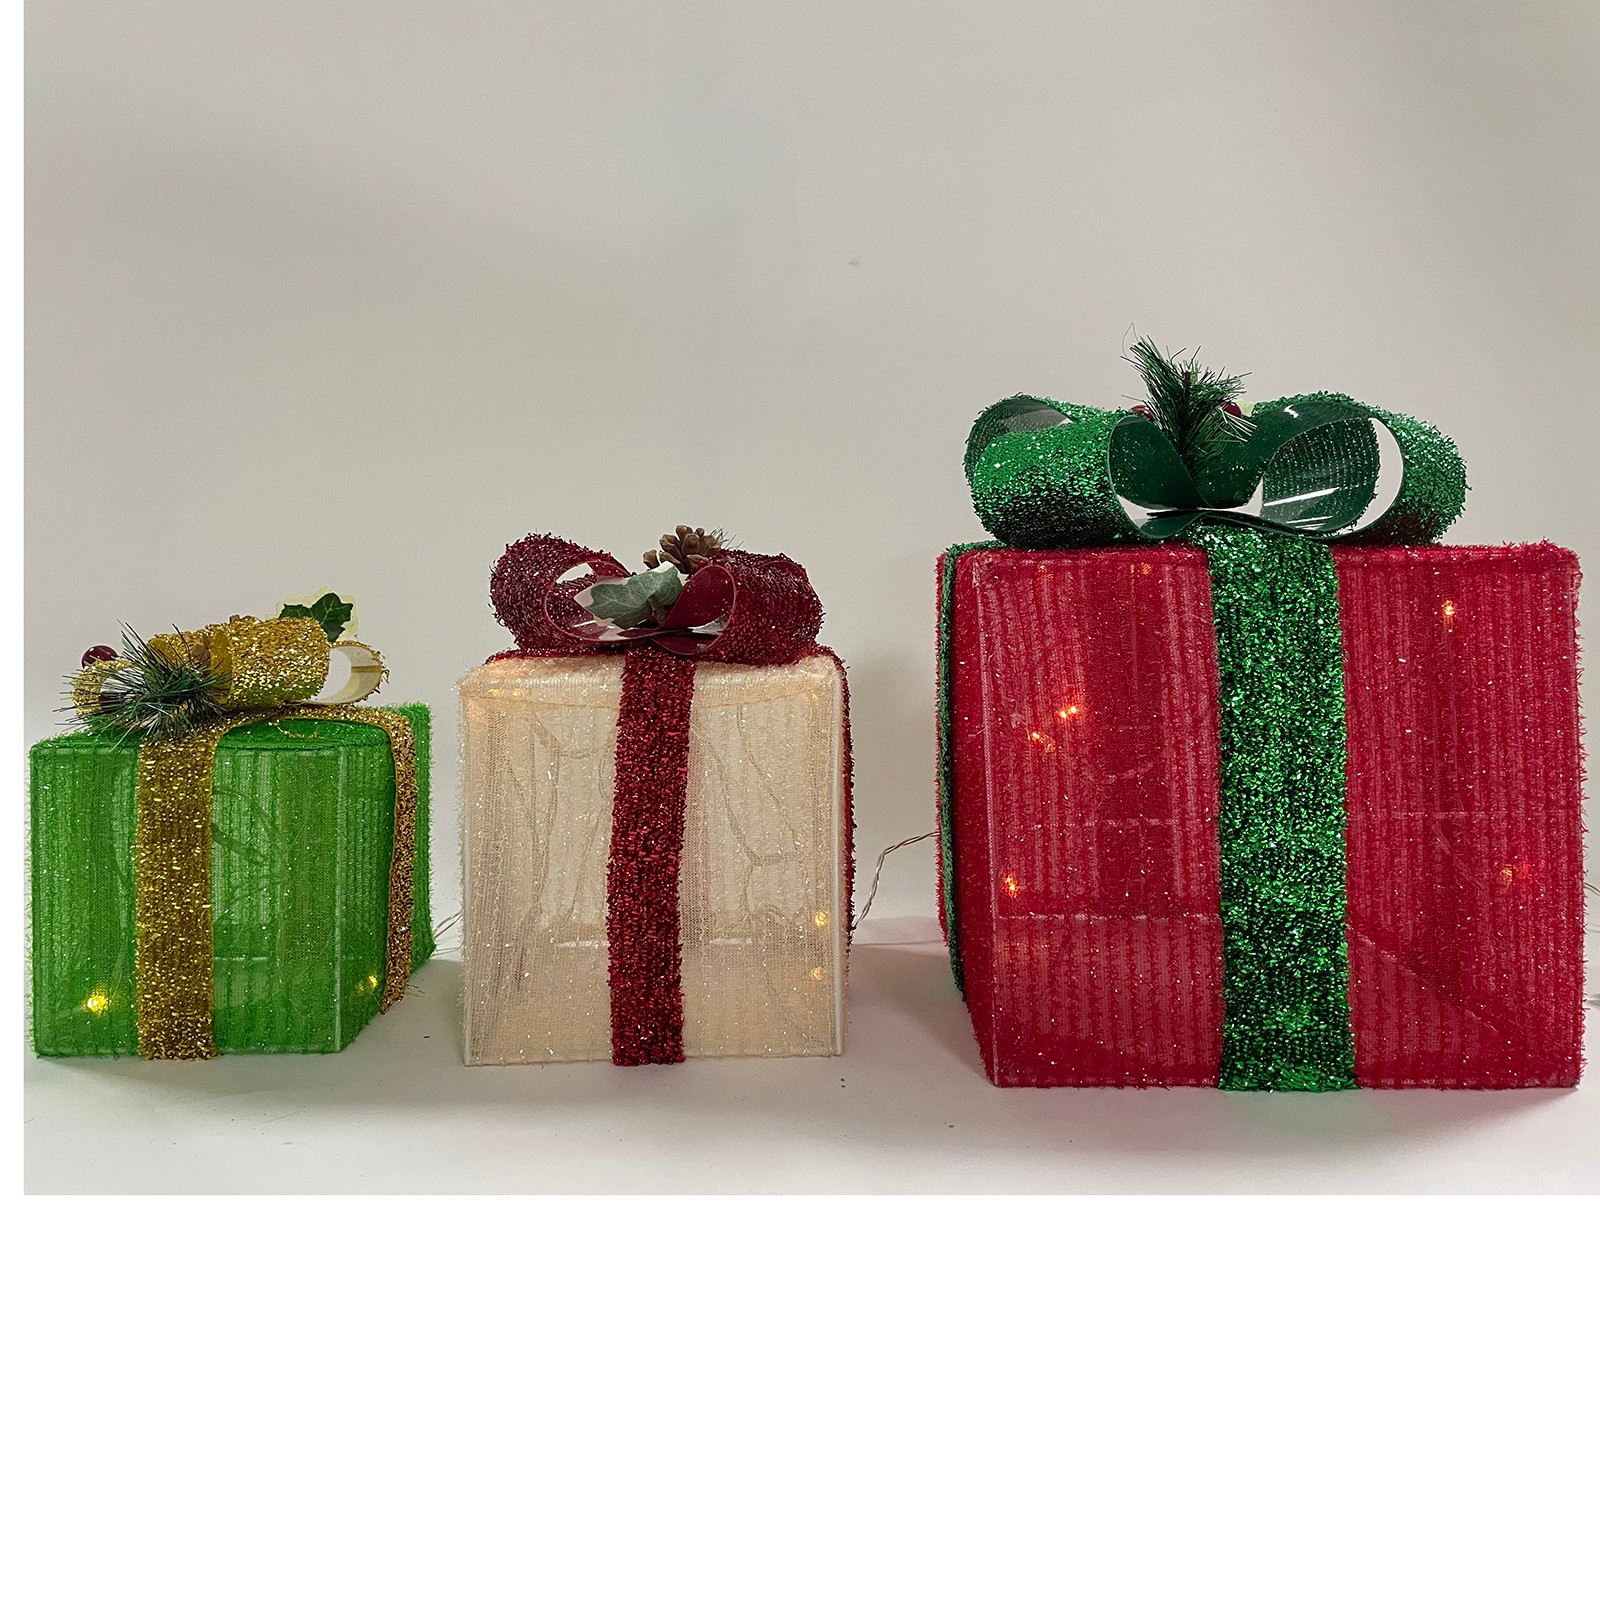 Light Up Christmas Gift Present Rattan Boxes Under Xmas Tree Decoration Set  of 3 | eBay